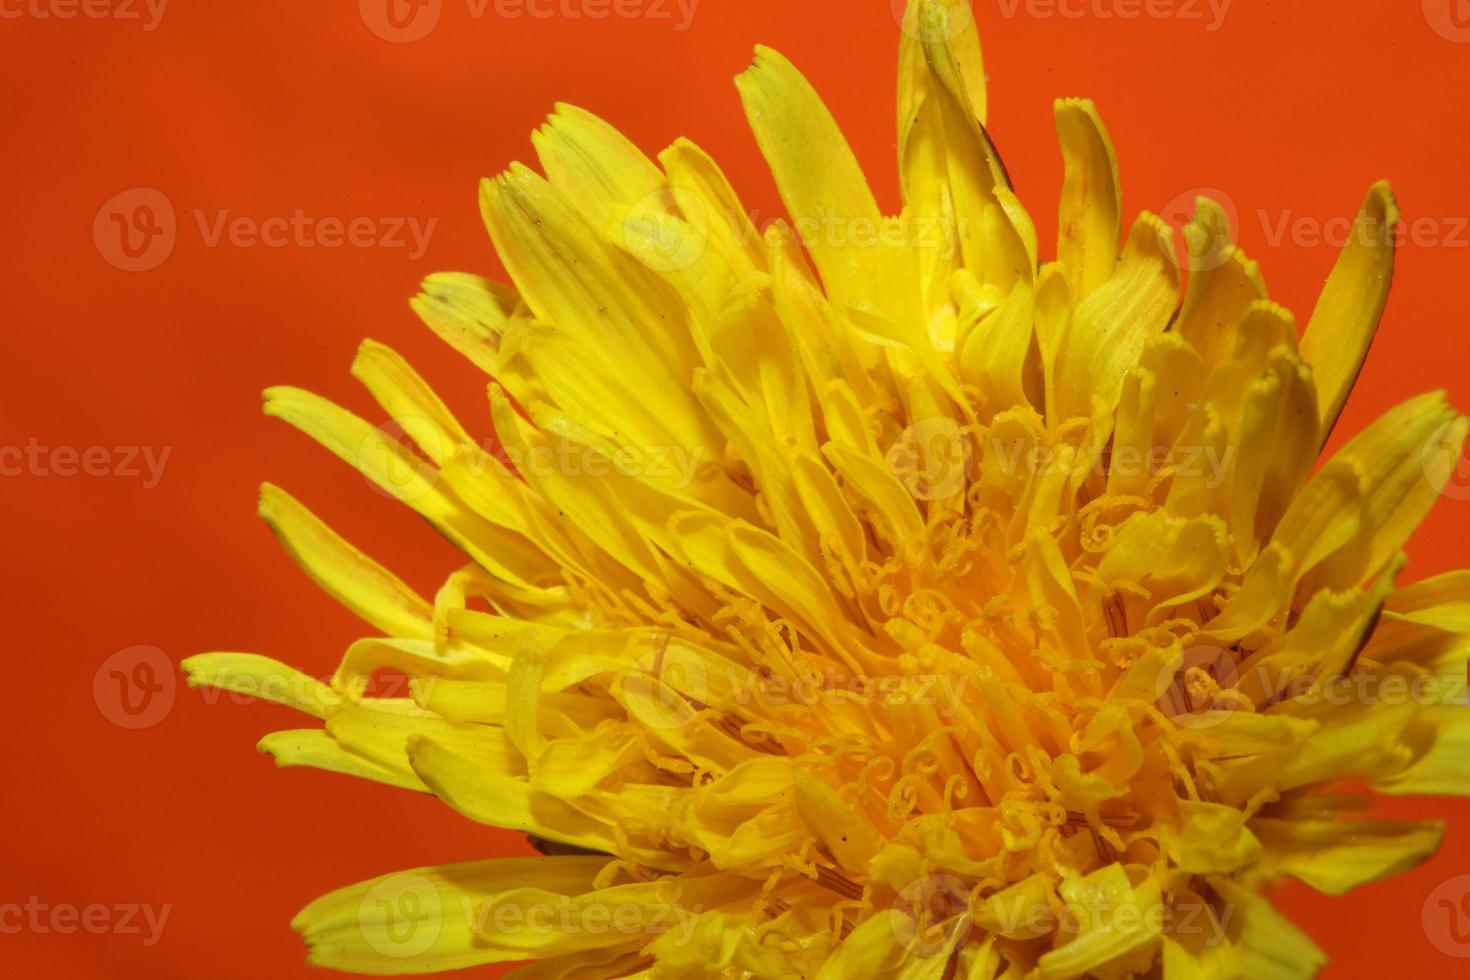 Flor de flor silvestre cerrar taraxacum officinale diente de león asteraceae foto